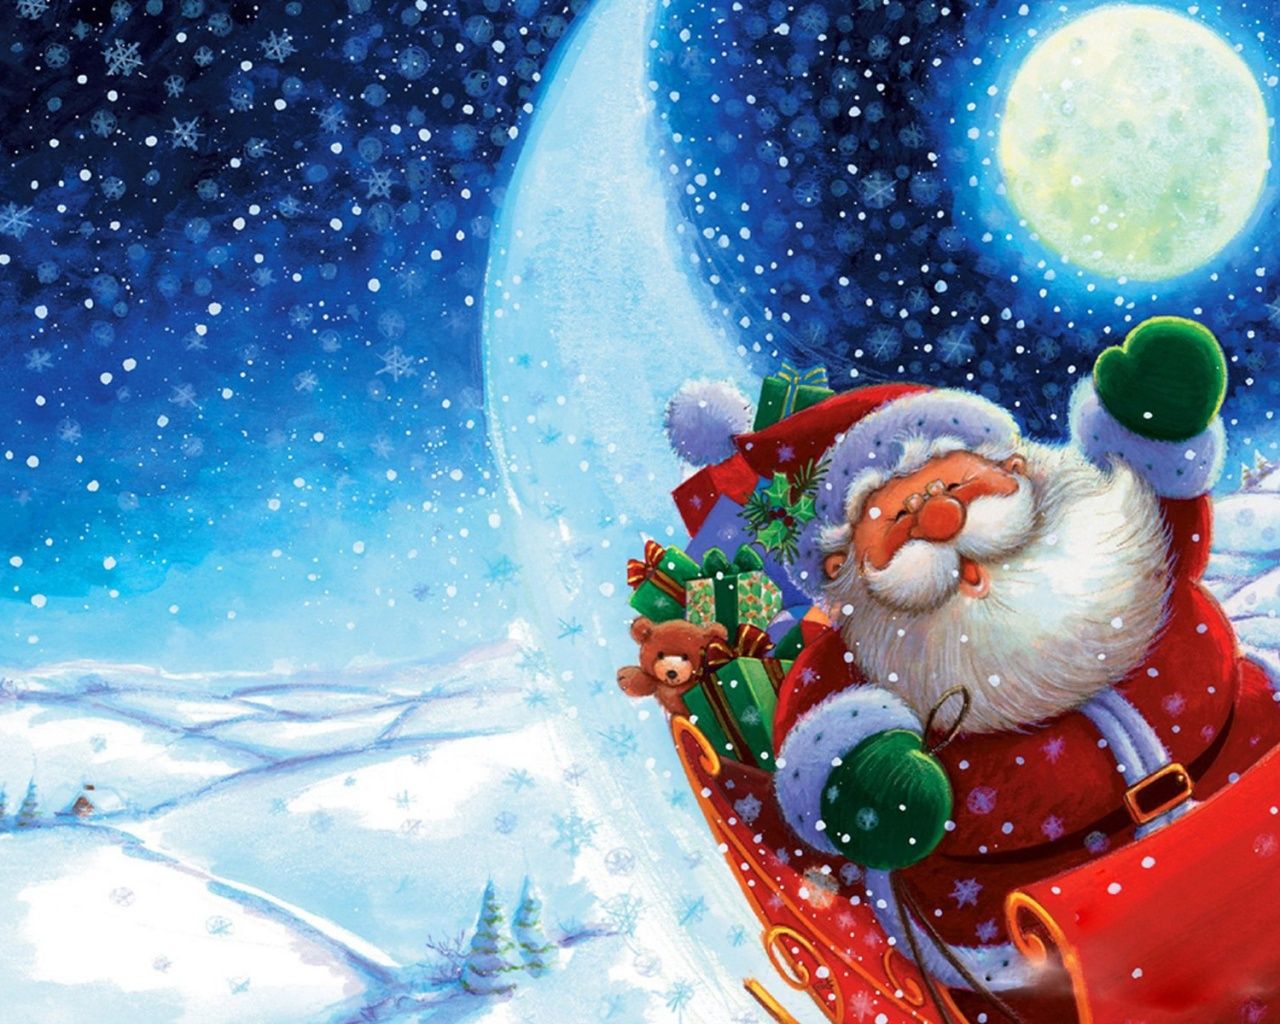 Christmas wallpaper, Free Wallpaper Downloads: SantaBanta Wallpaper